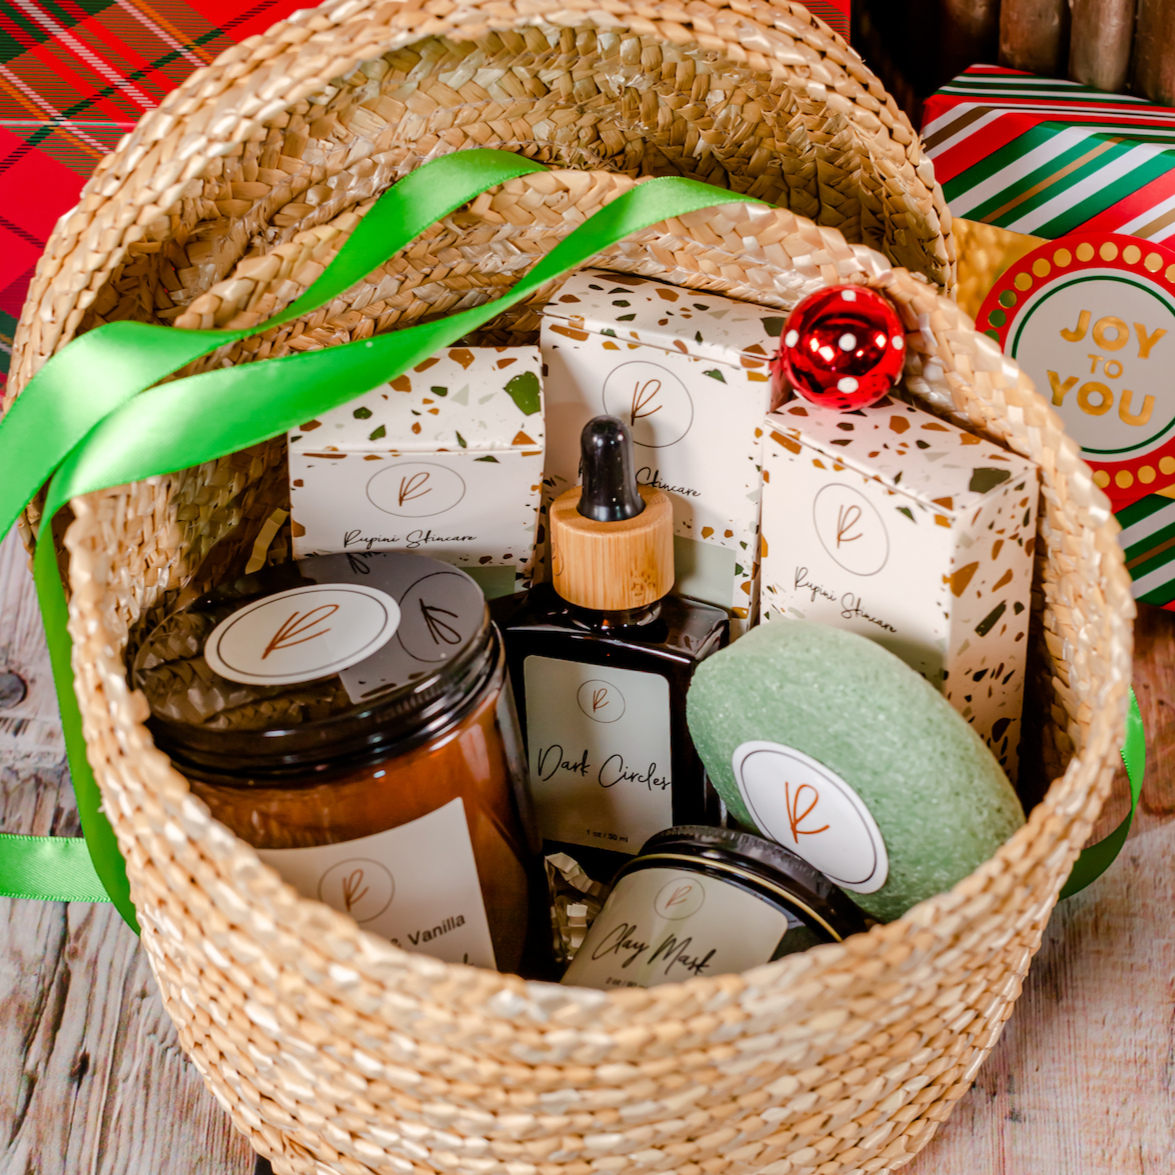 HOLIDAY BAKING GIFT BASKET #basketmaking #giftbaskets #baskets  #christmasgifts #holidaygifts 